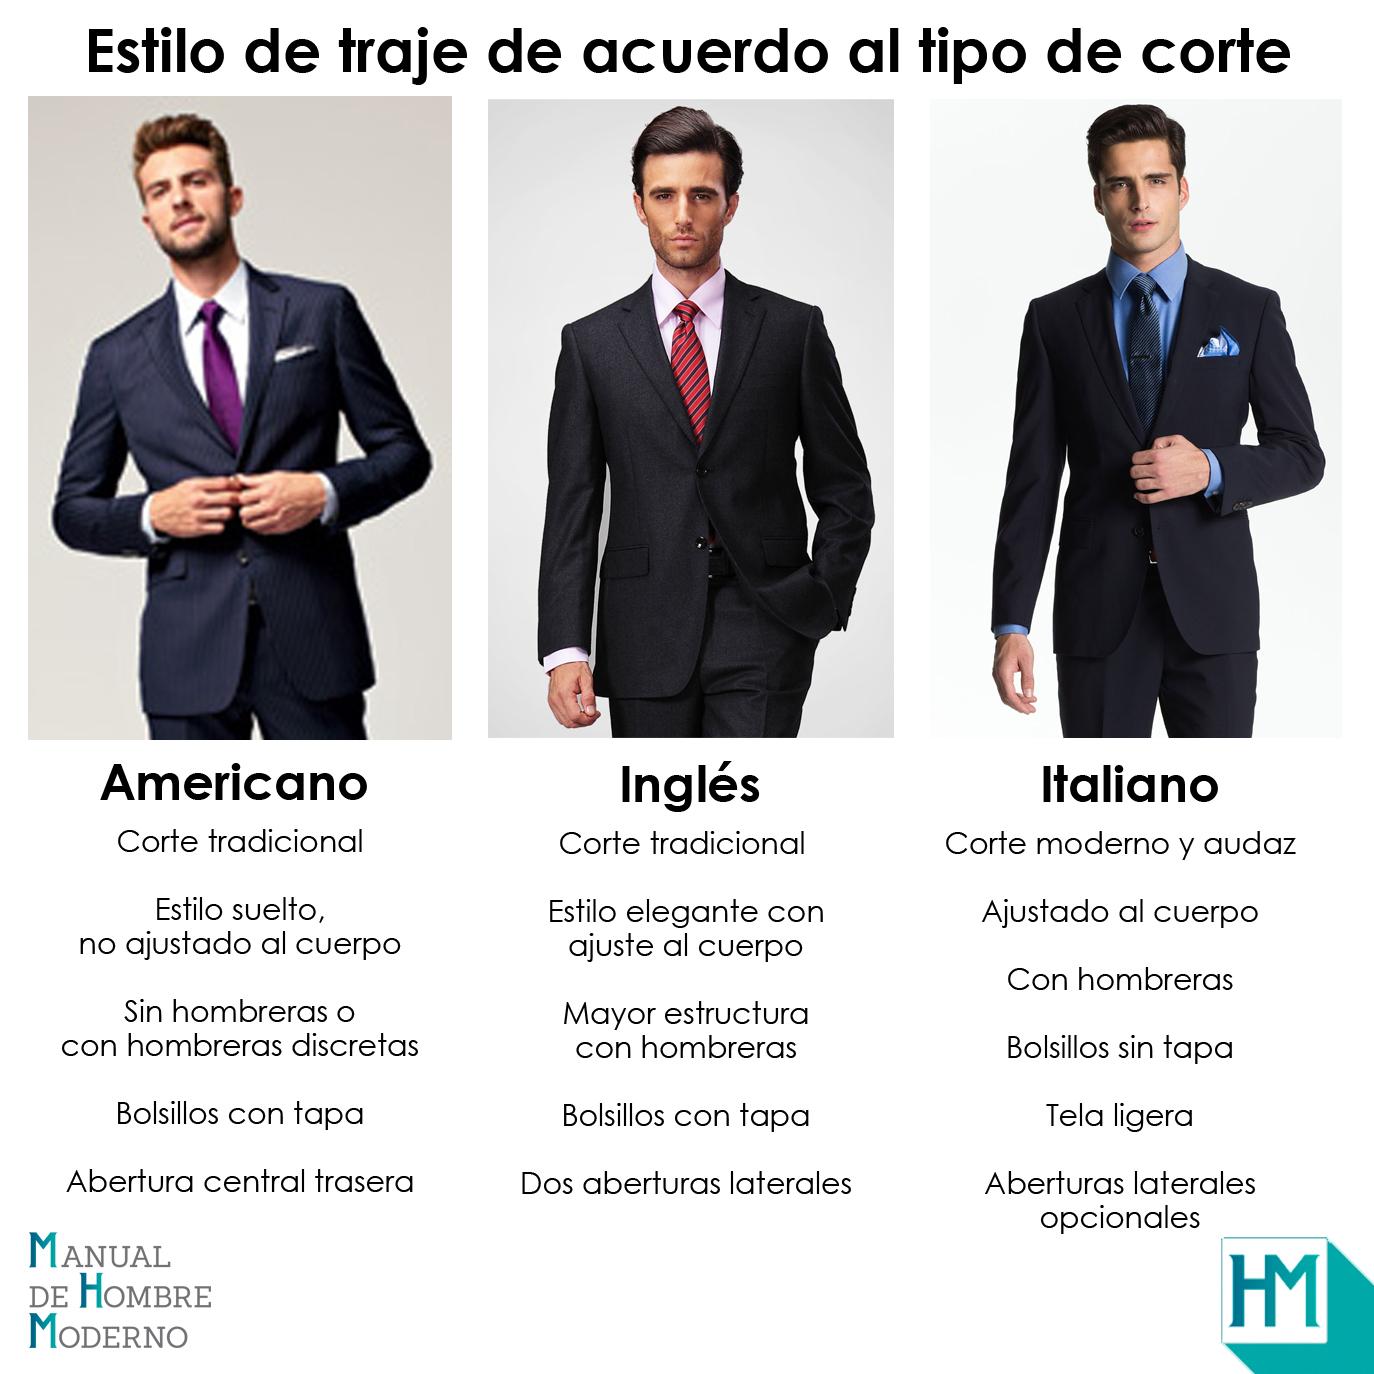 Hildeberto Martínez on Twitter: "Existen 3 tipos traje de acuerdo a su corte: inglés e italiano. ¿Cuál es tu favorito? #HombreModerno http://t.co/c3HDXS5XM3" / Twitter